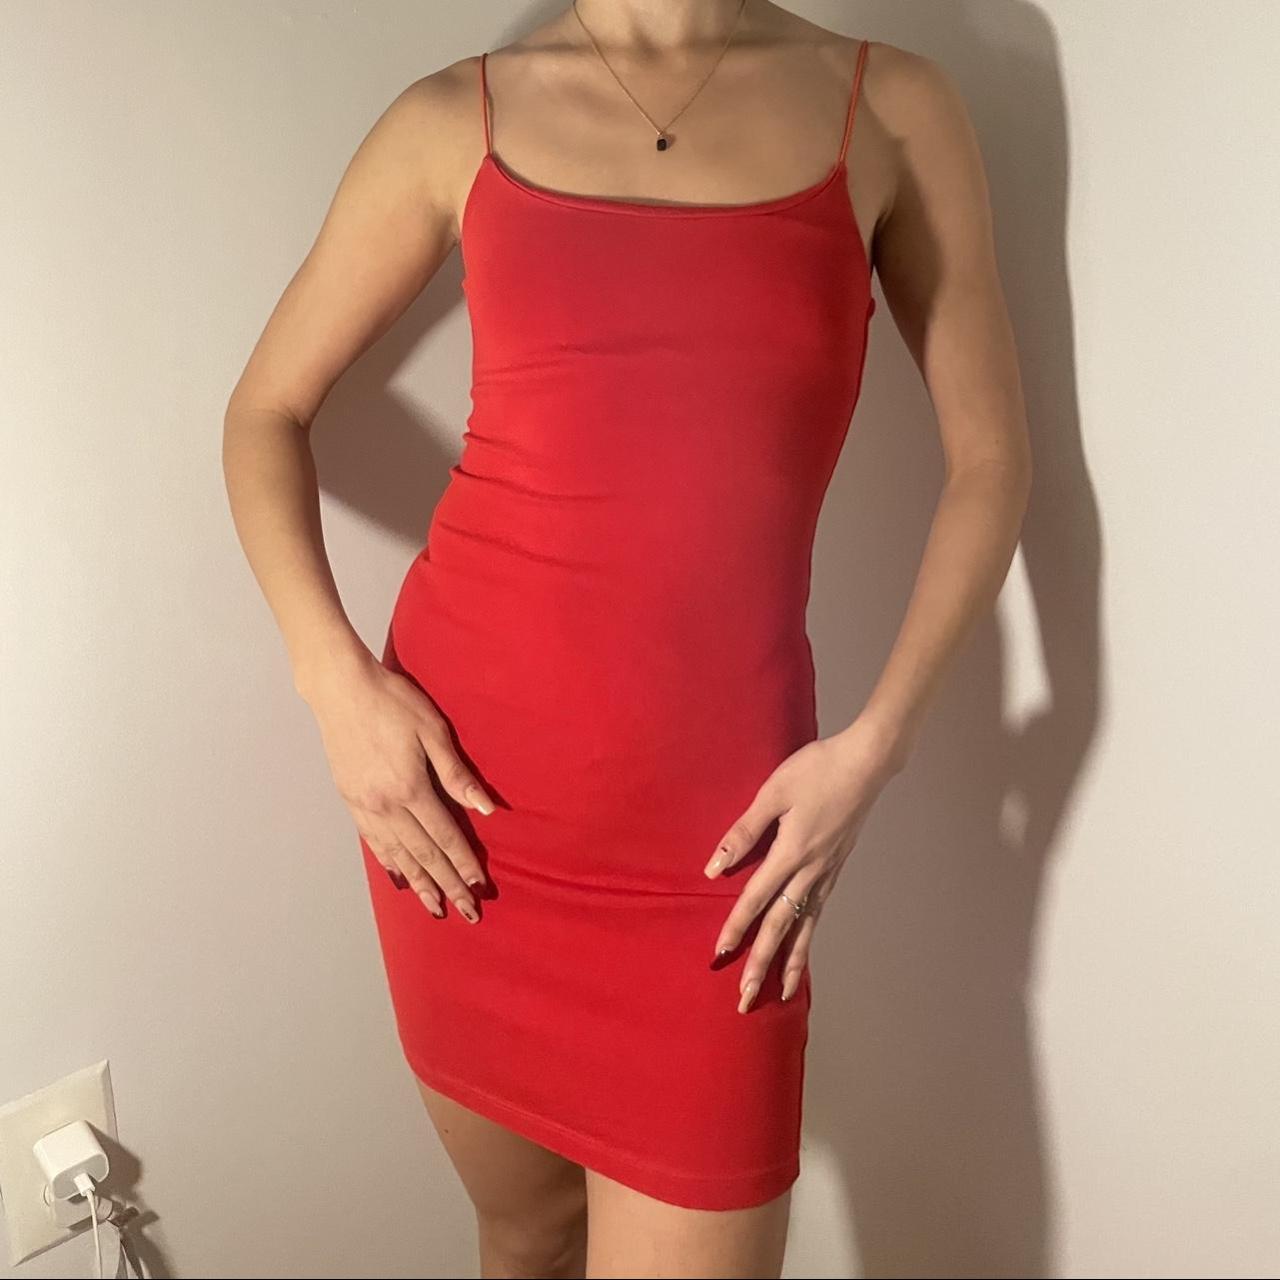 Zara Women's Red Dress